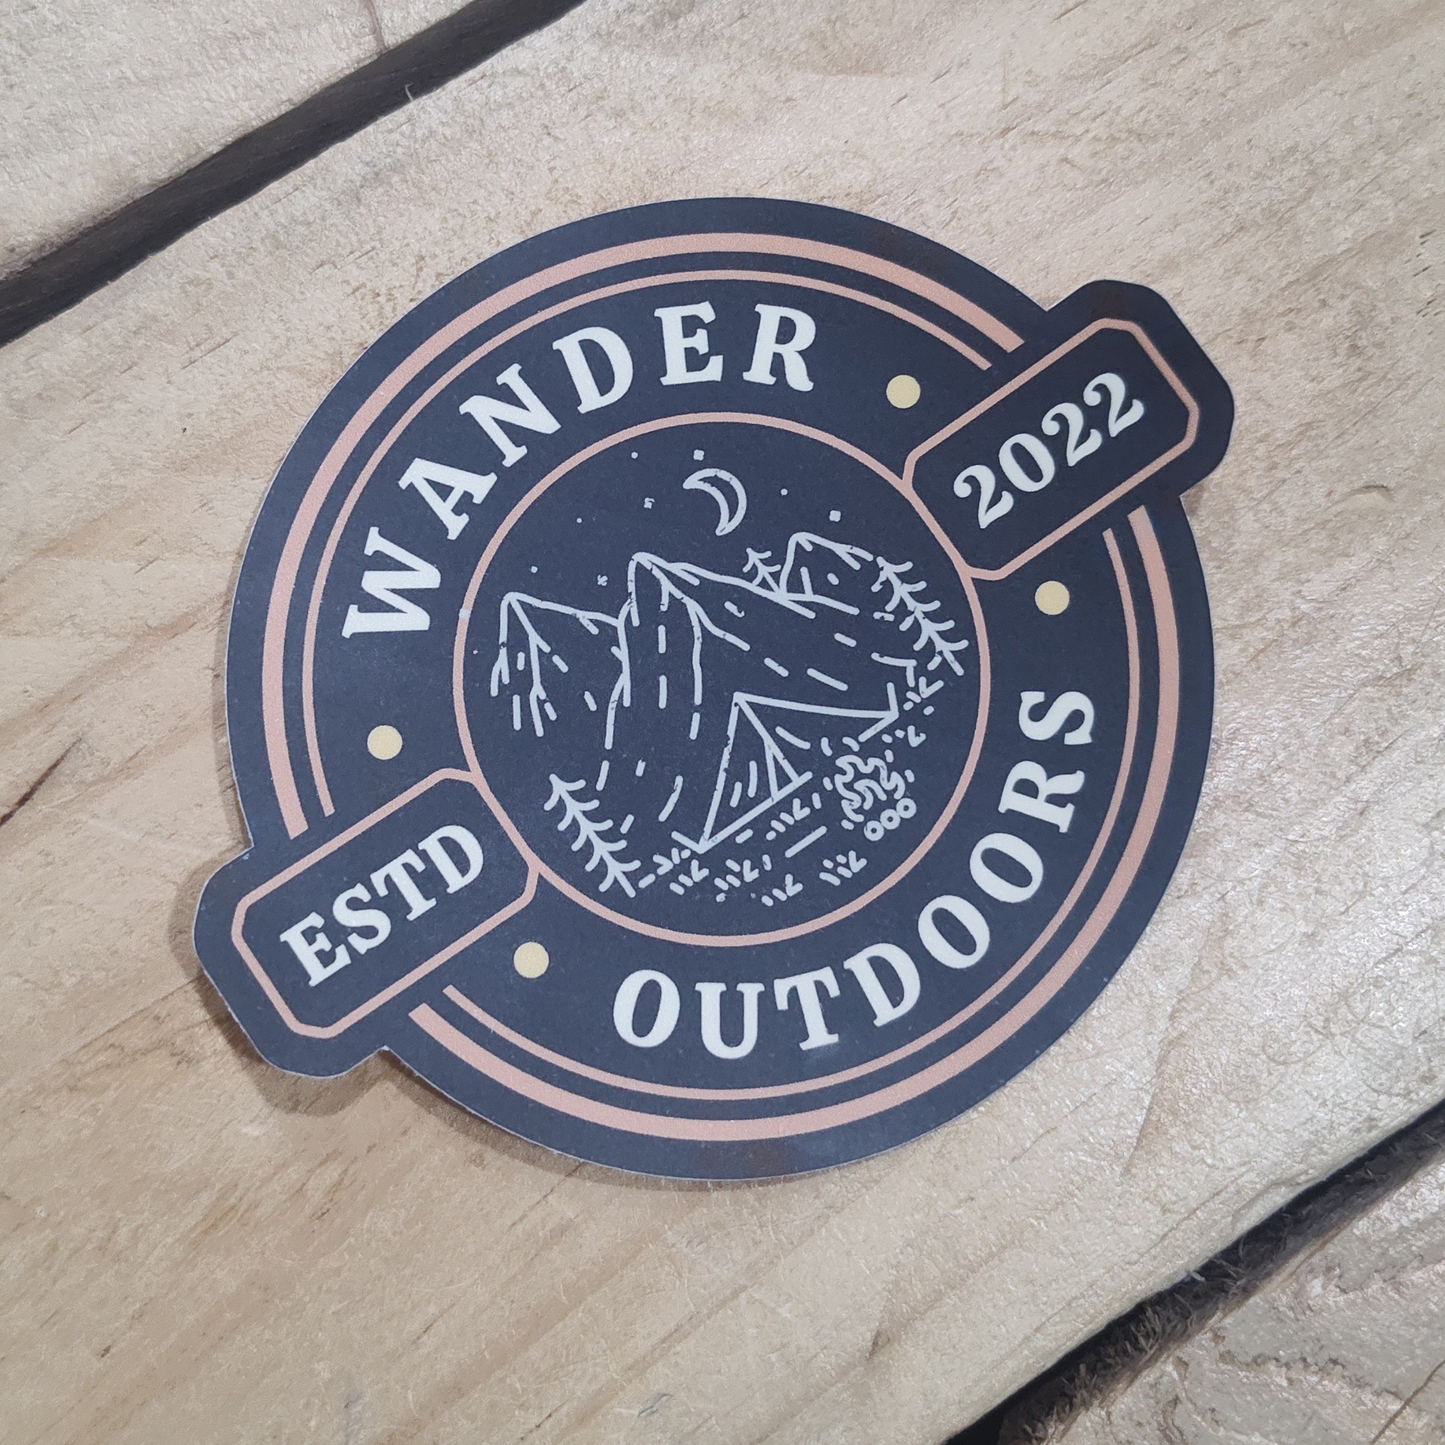 Wander Outdoor Camp Sticker